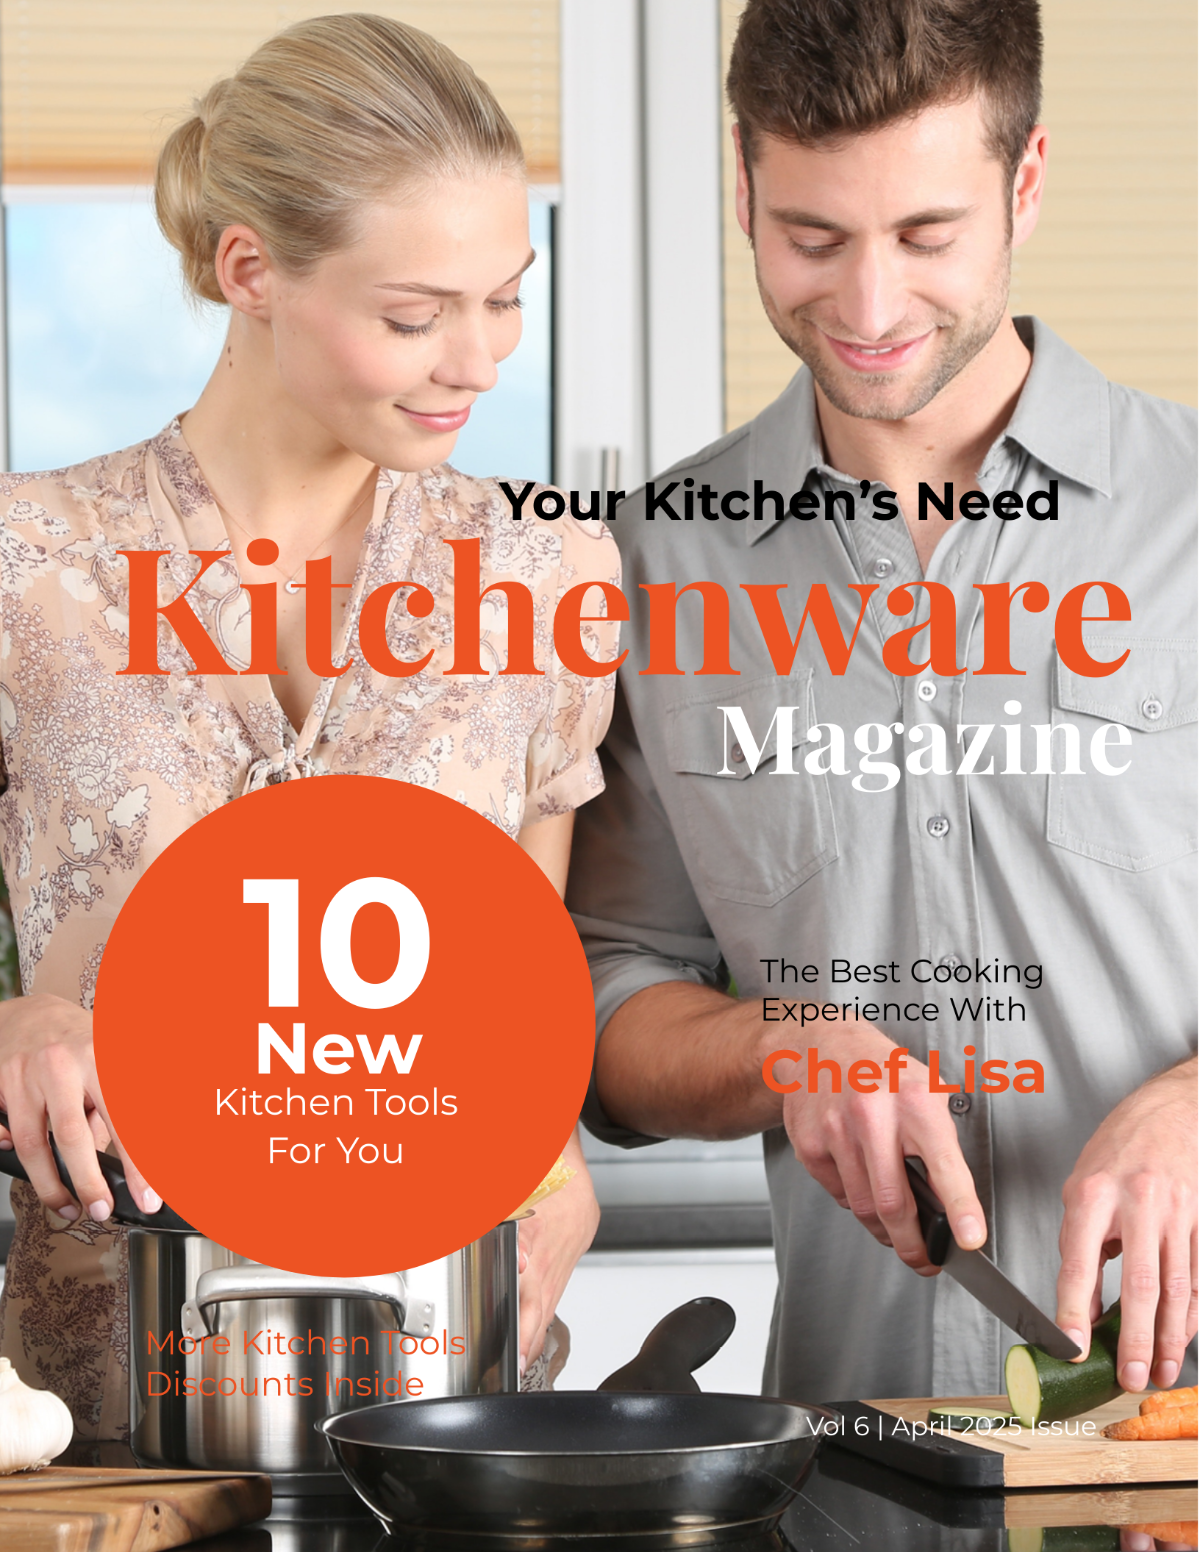 Kitchenware Marketing Magazine